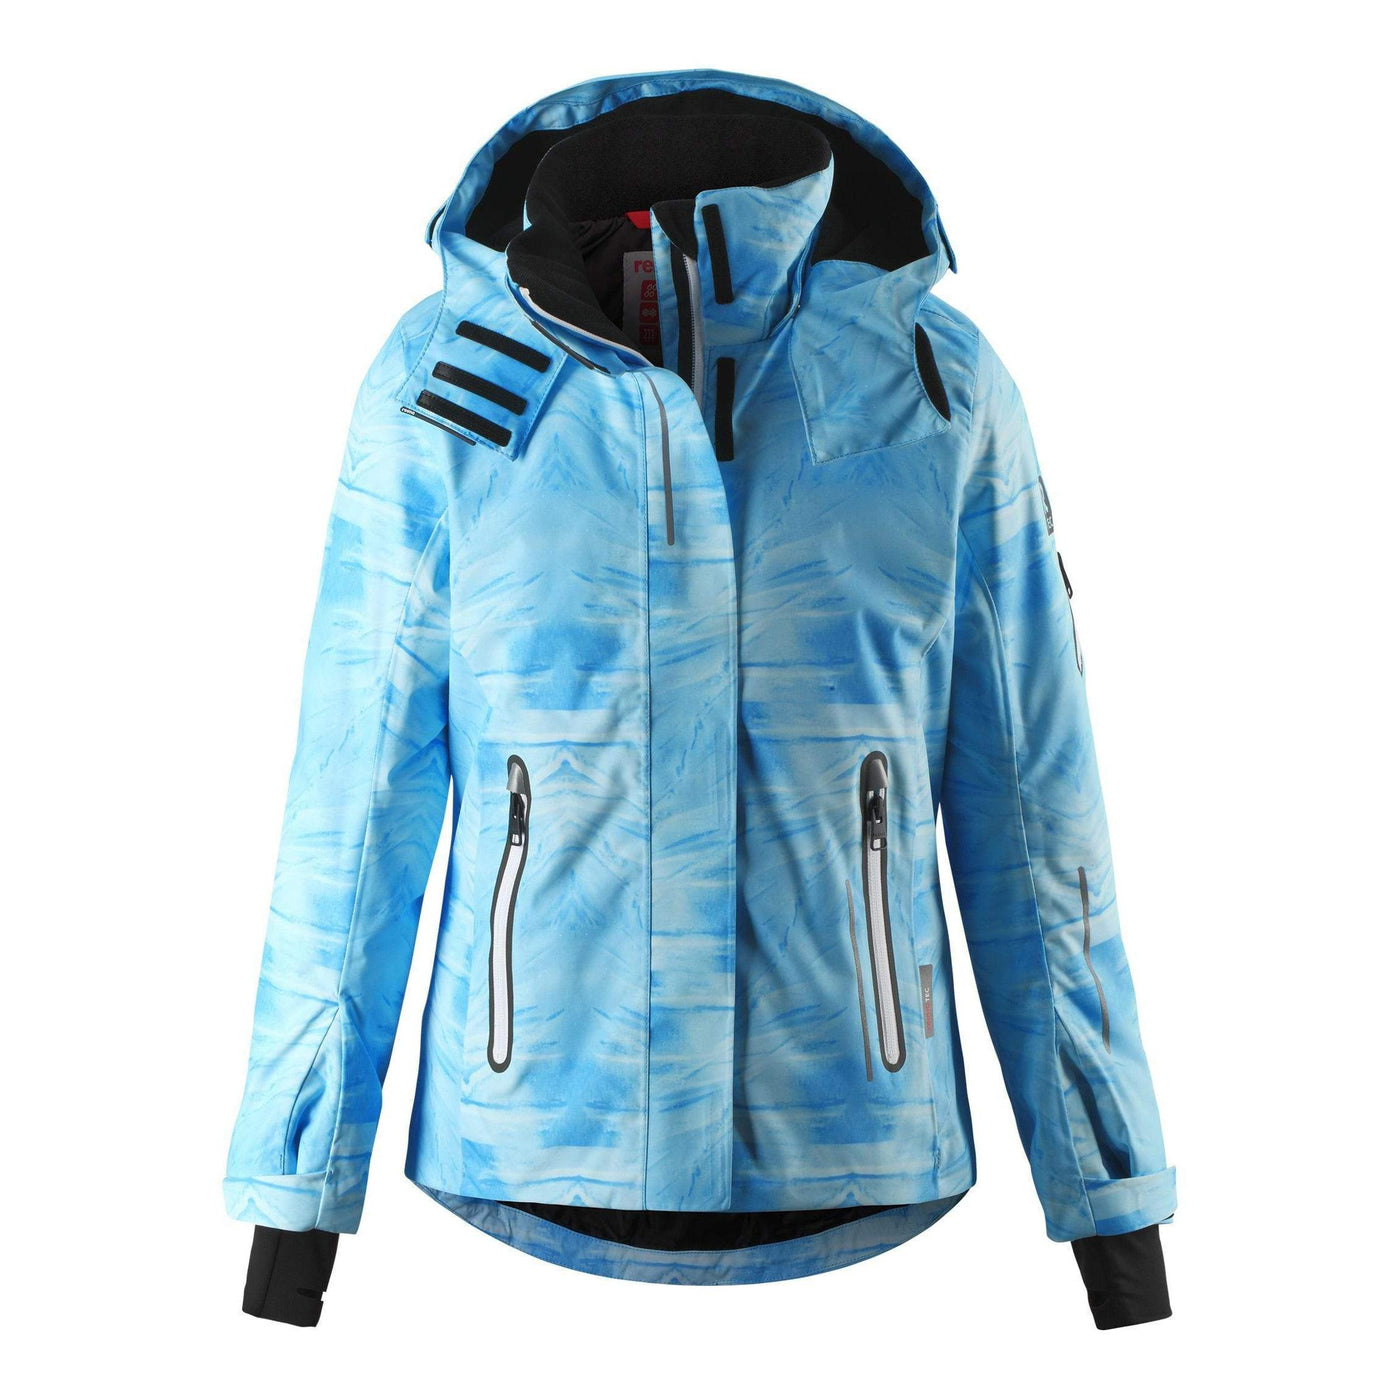 SnowKids Outerwear Jacket 146 cm Reima Reimatec Frost Snow Jacket